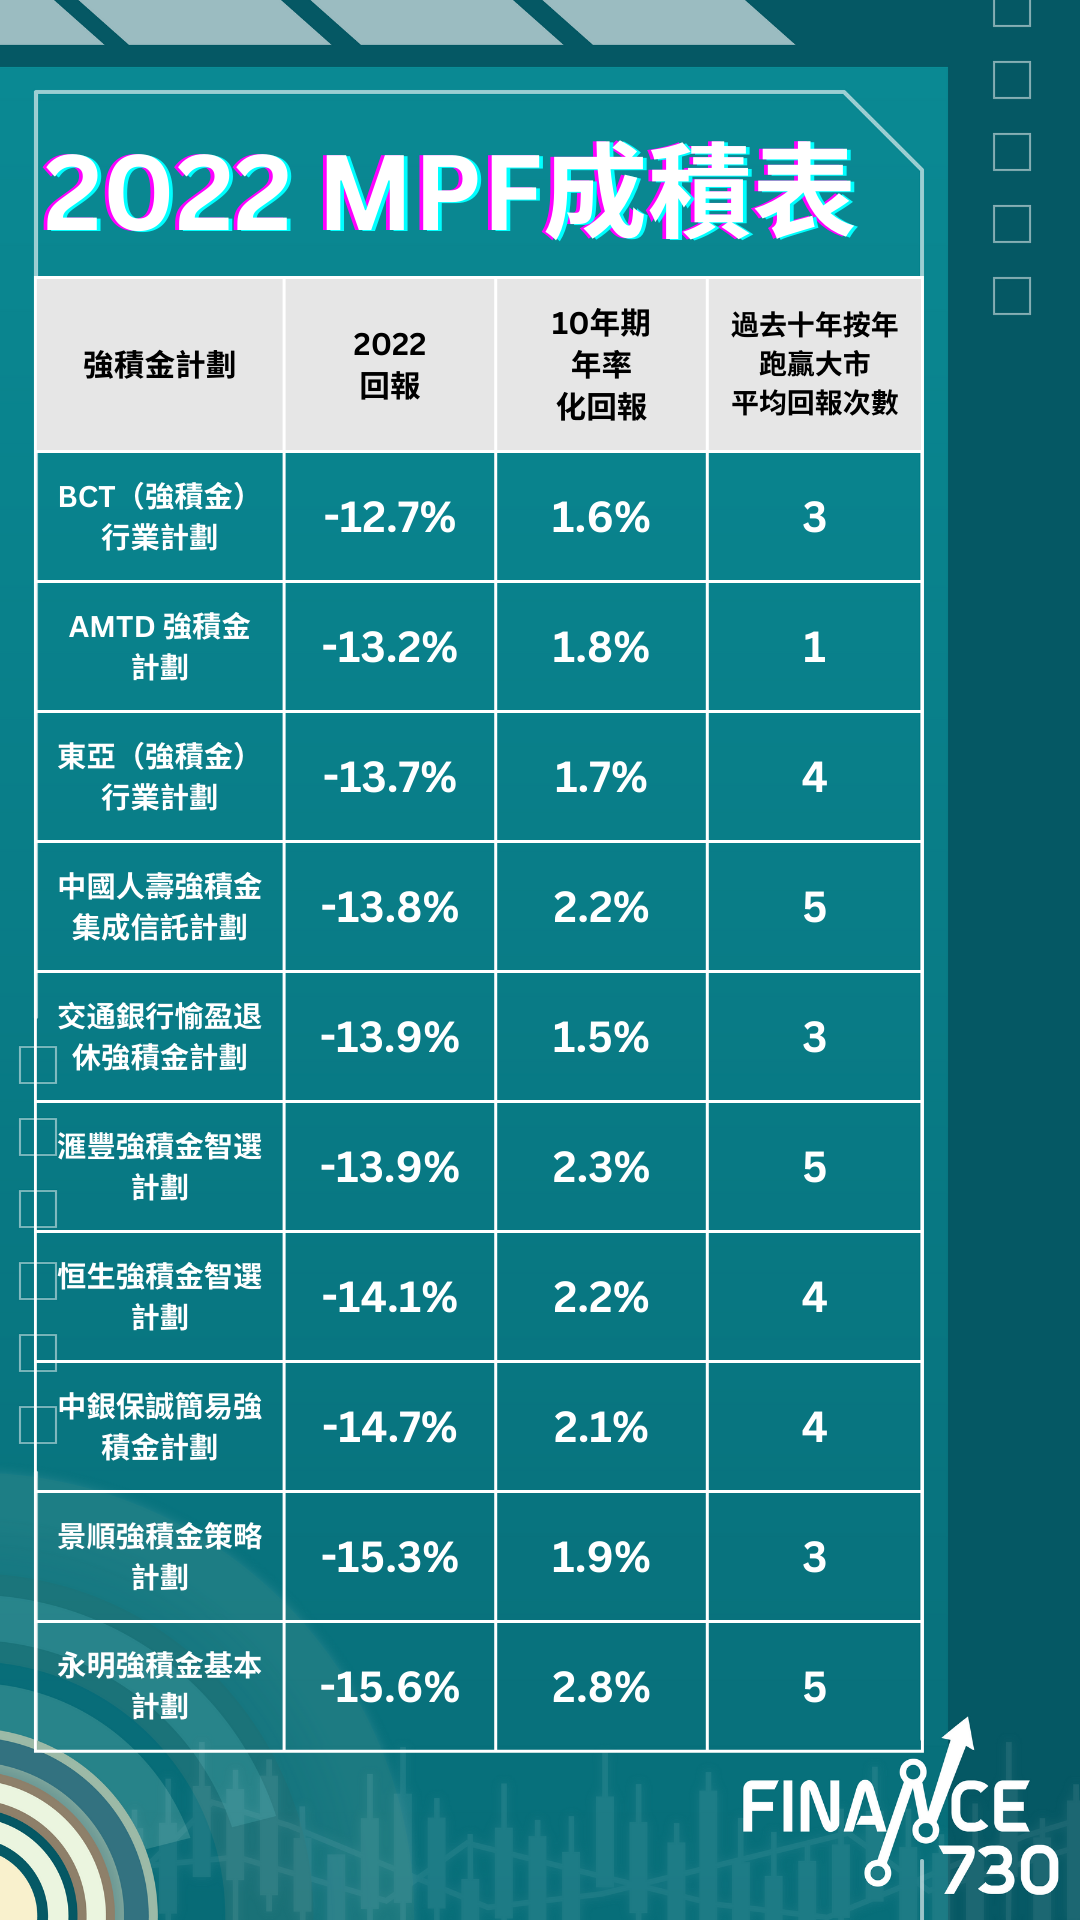 BCT成2022年最佳MPF計劃 龍頭公司僅中銀及滙豐跑贏大市